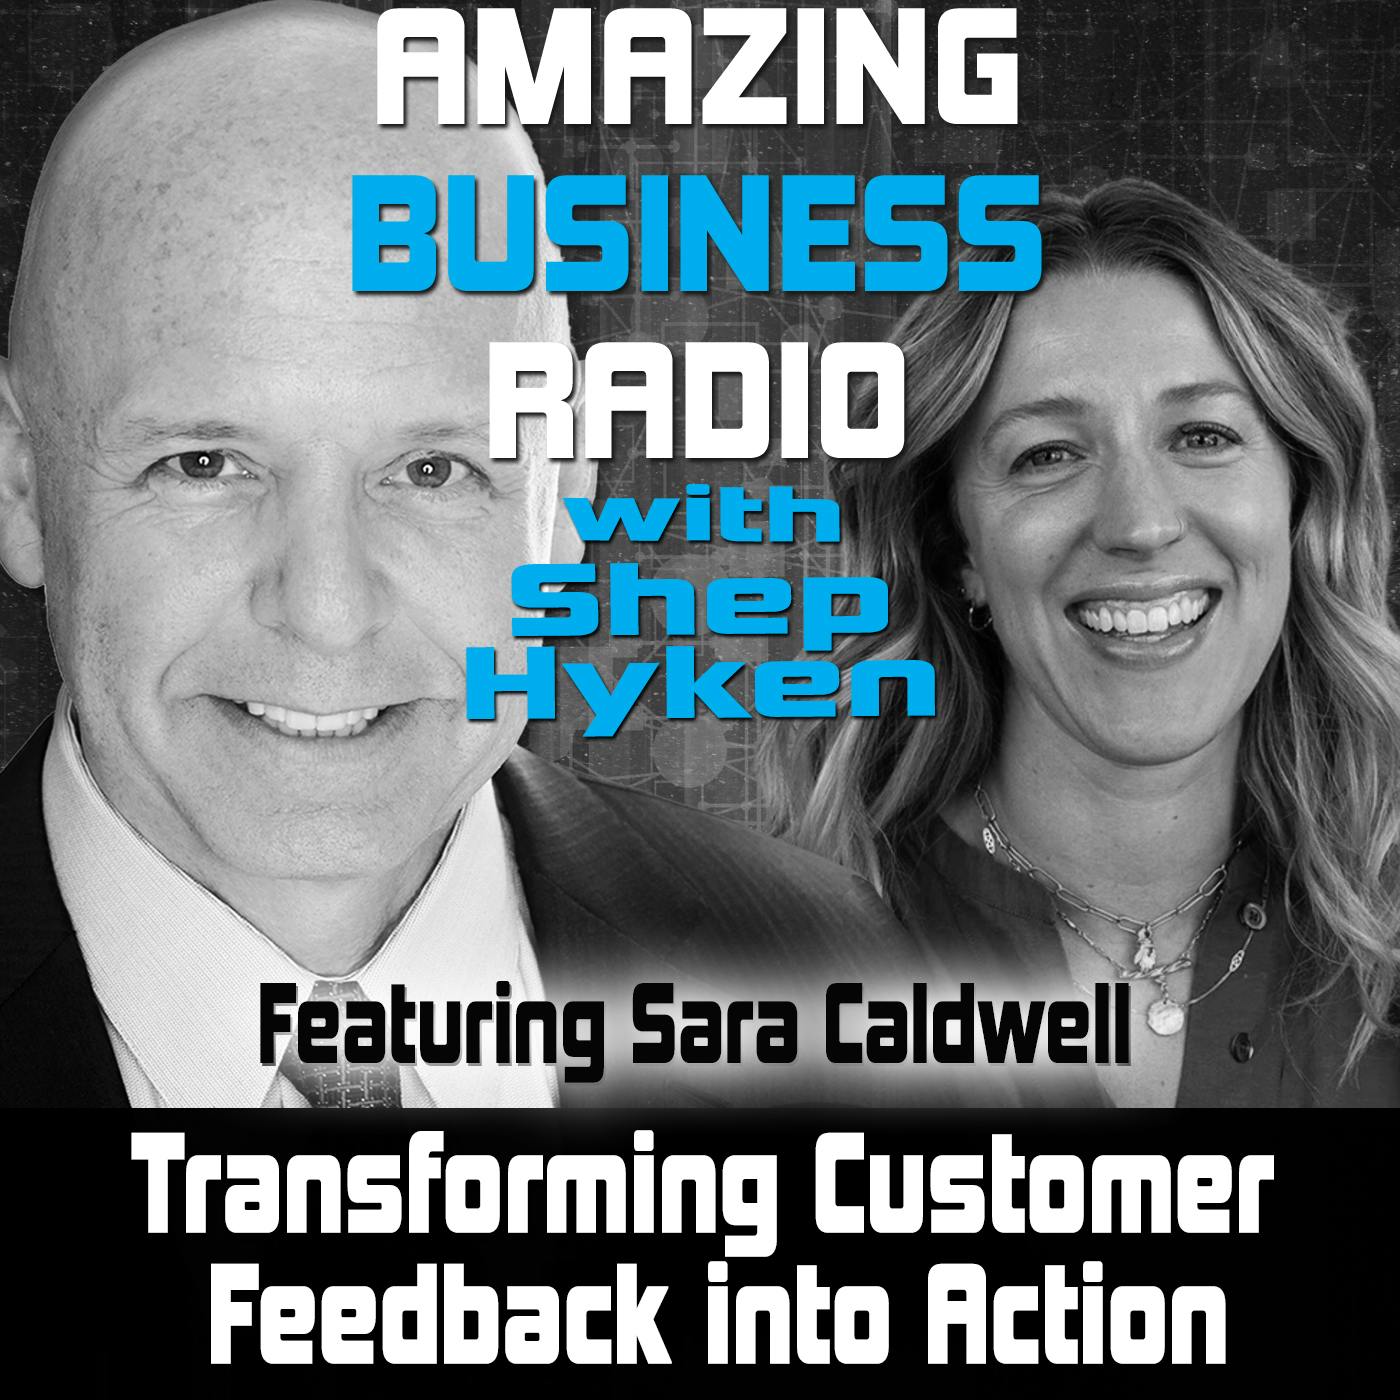 Transforming Customer Feedback into Action Featuring Sara Caldwell